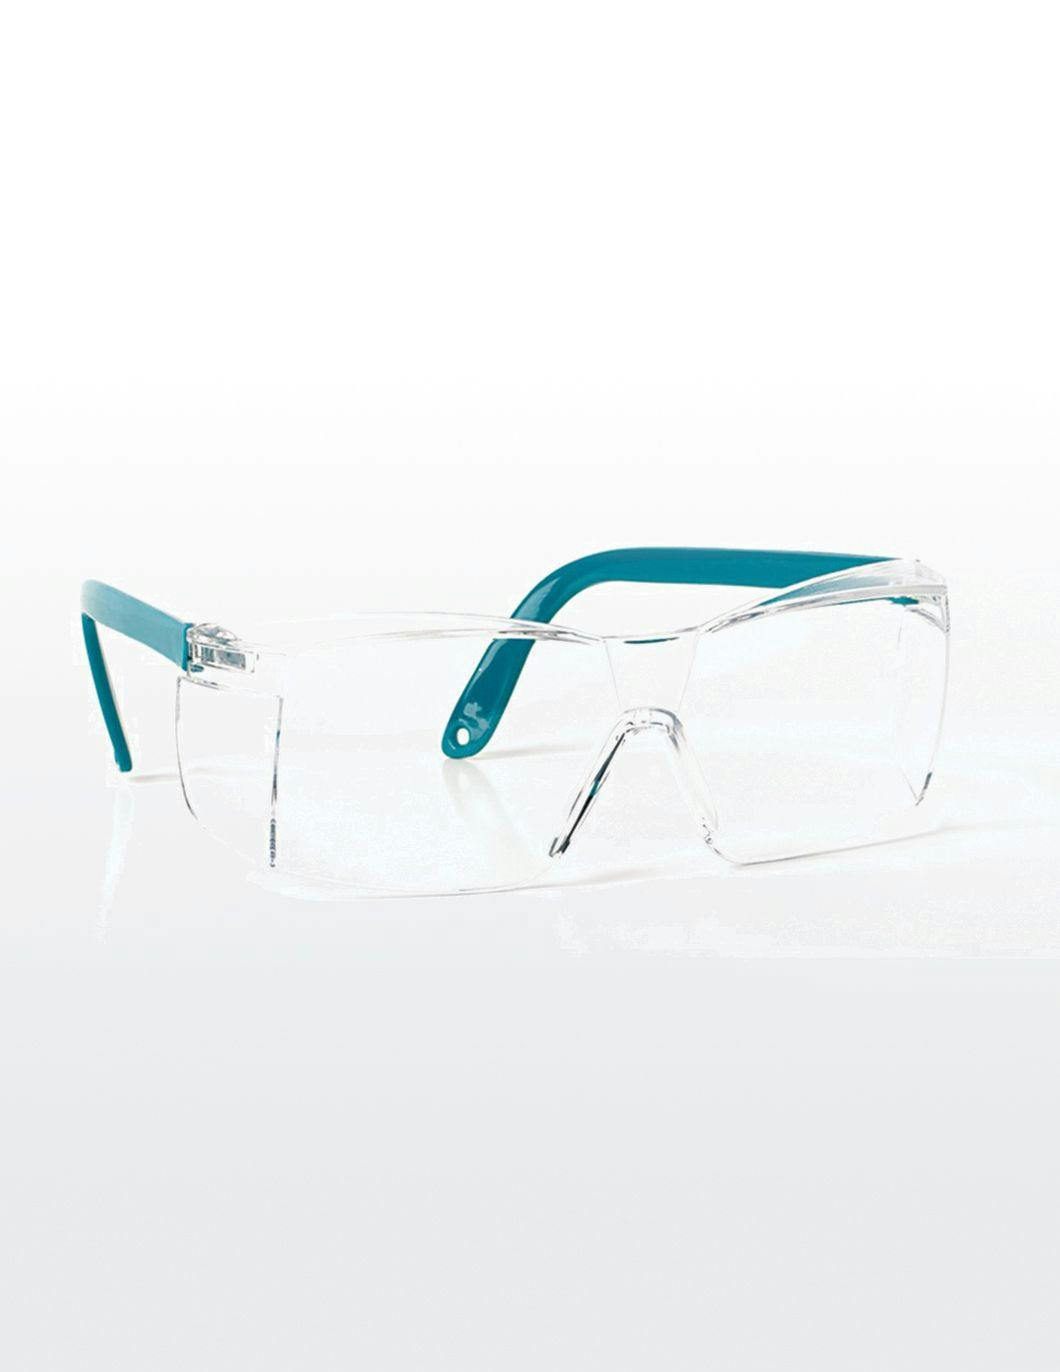 protective-eyewear-safety-glasses